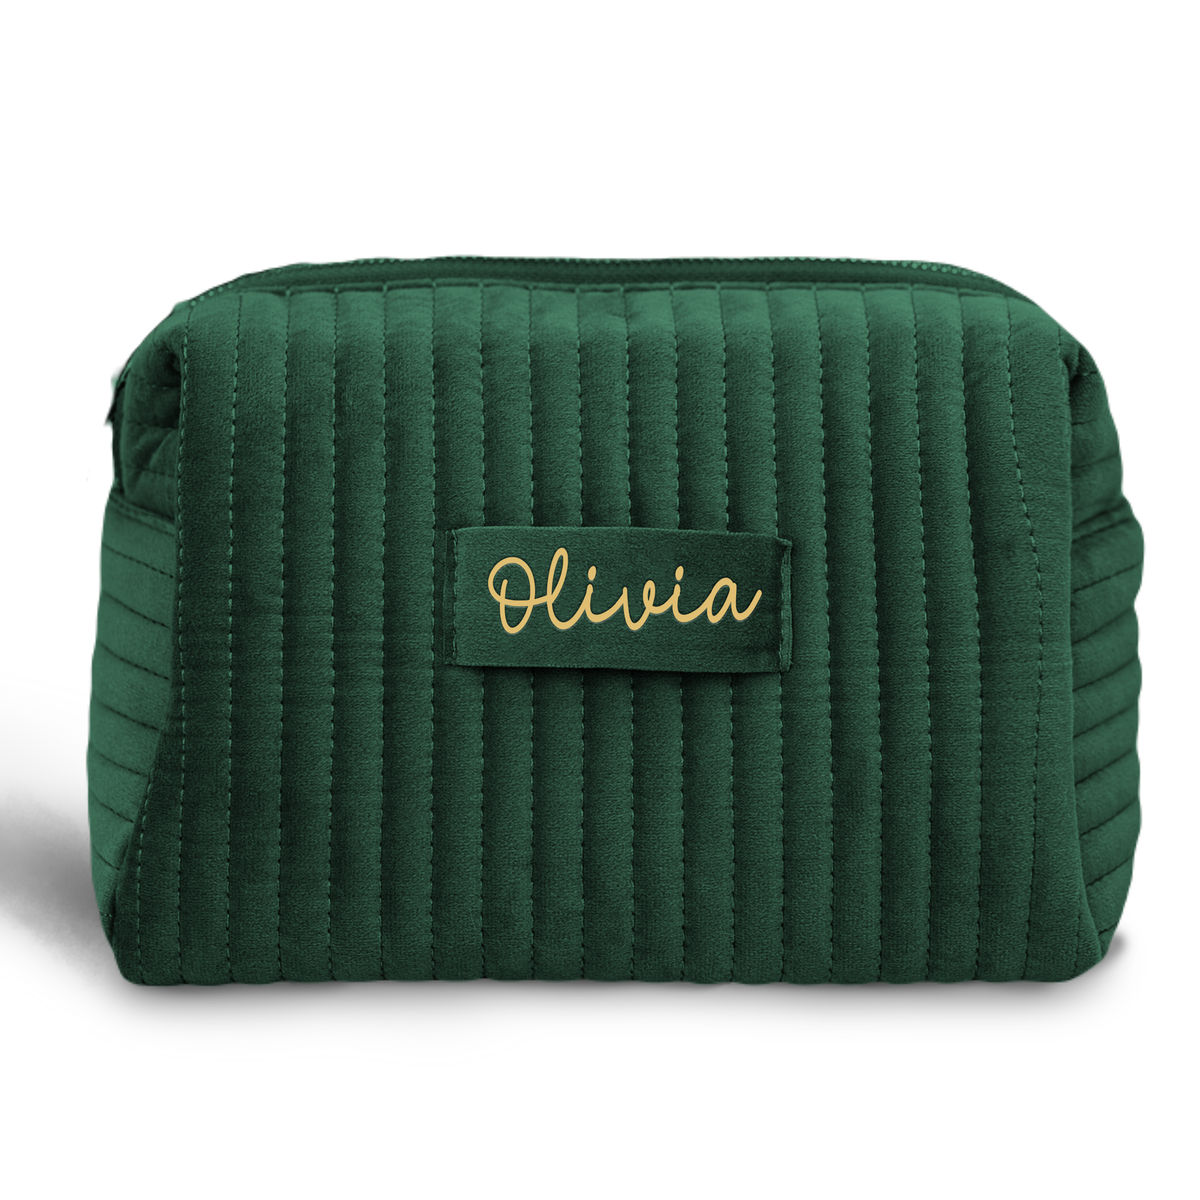 Personalized Bag - Personalized Name - Personalized Gift Bags - Custom Your Name - Green_5